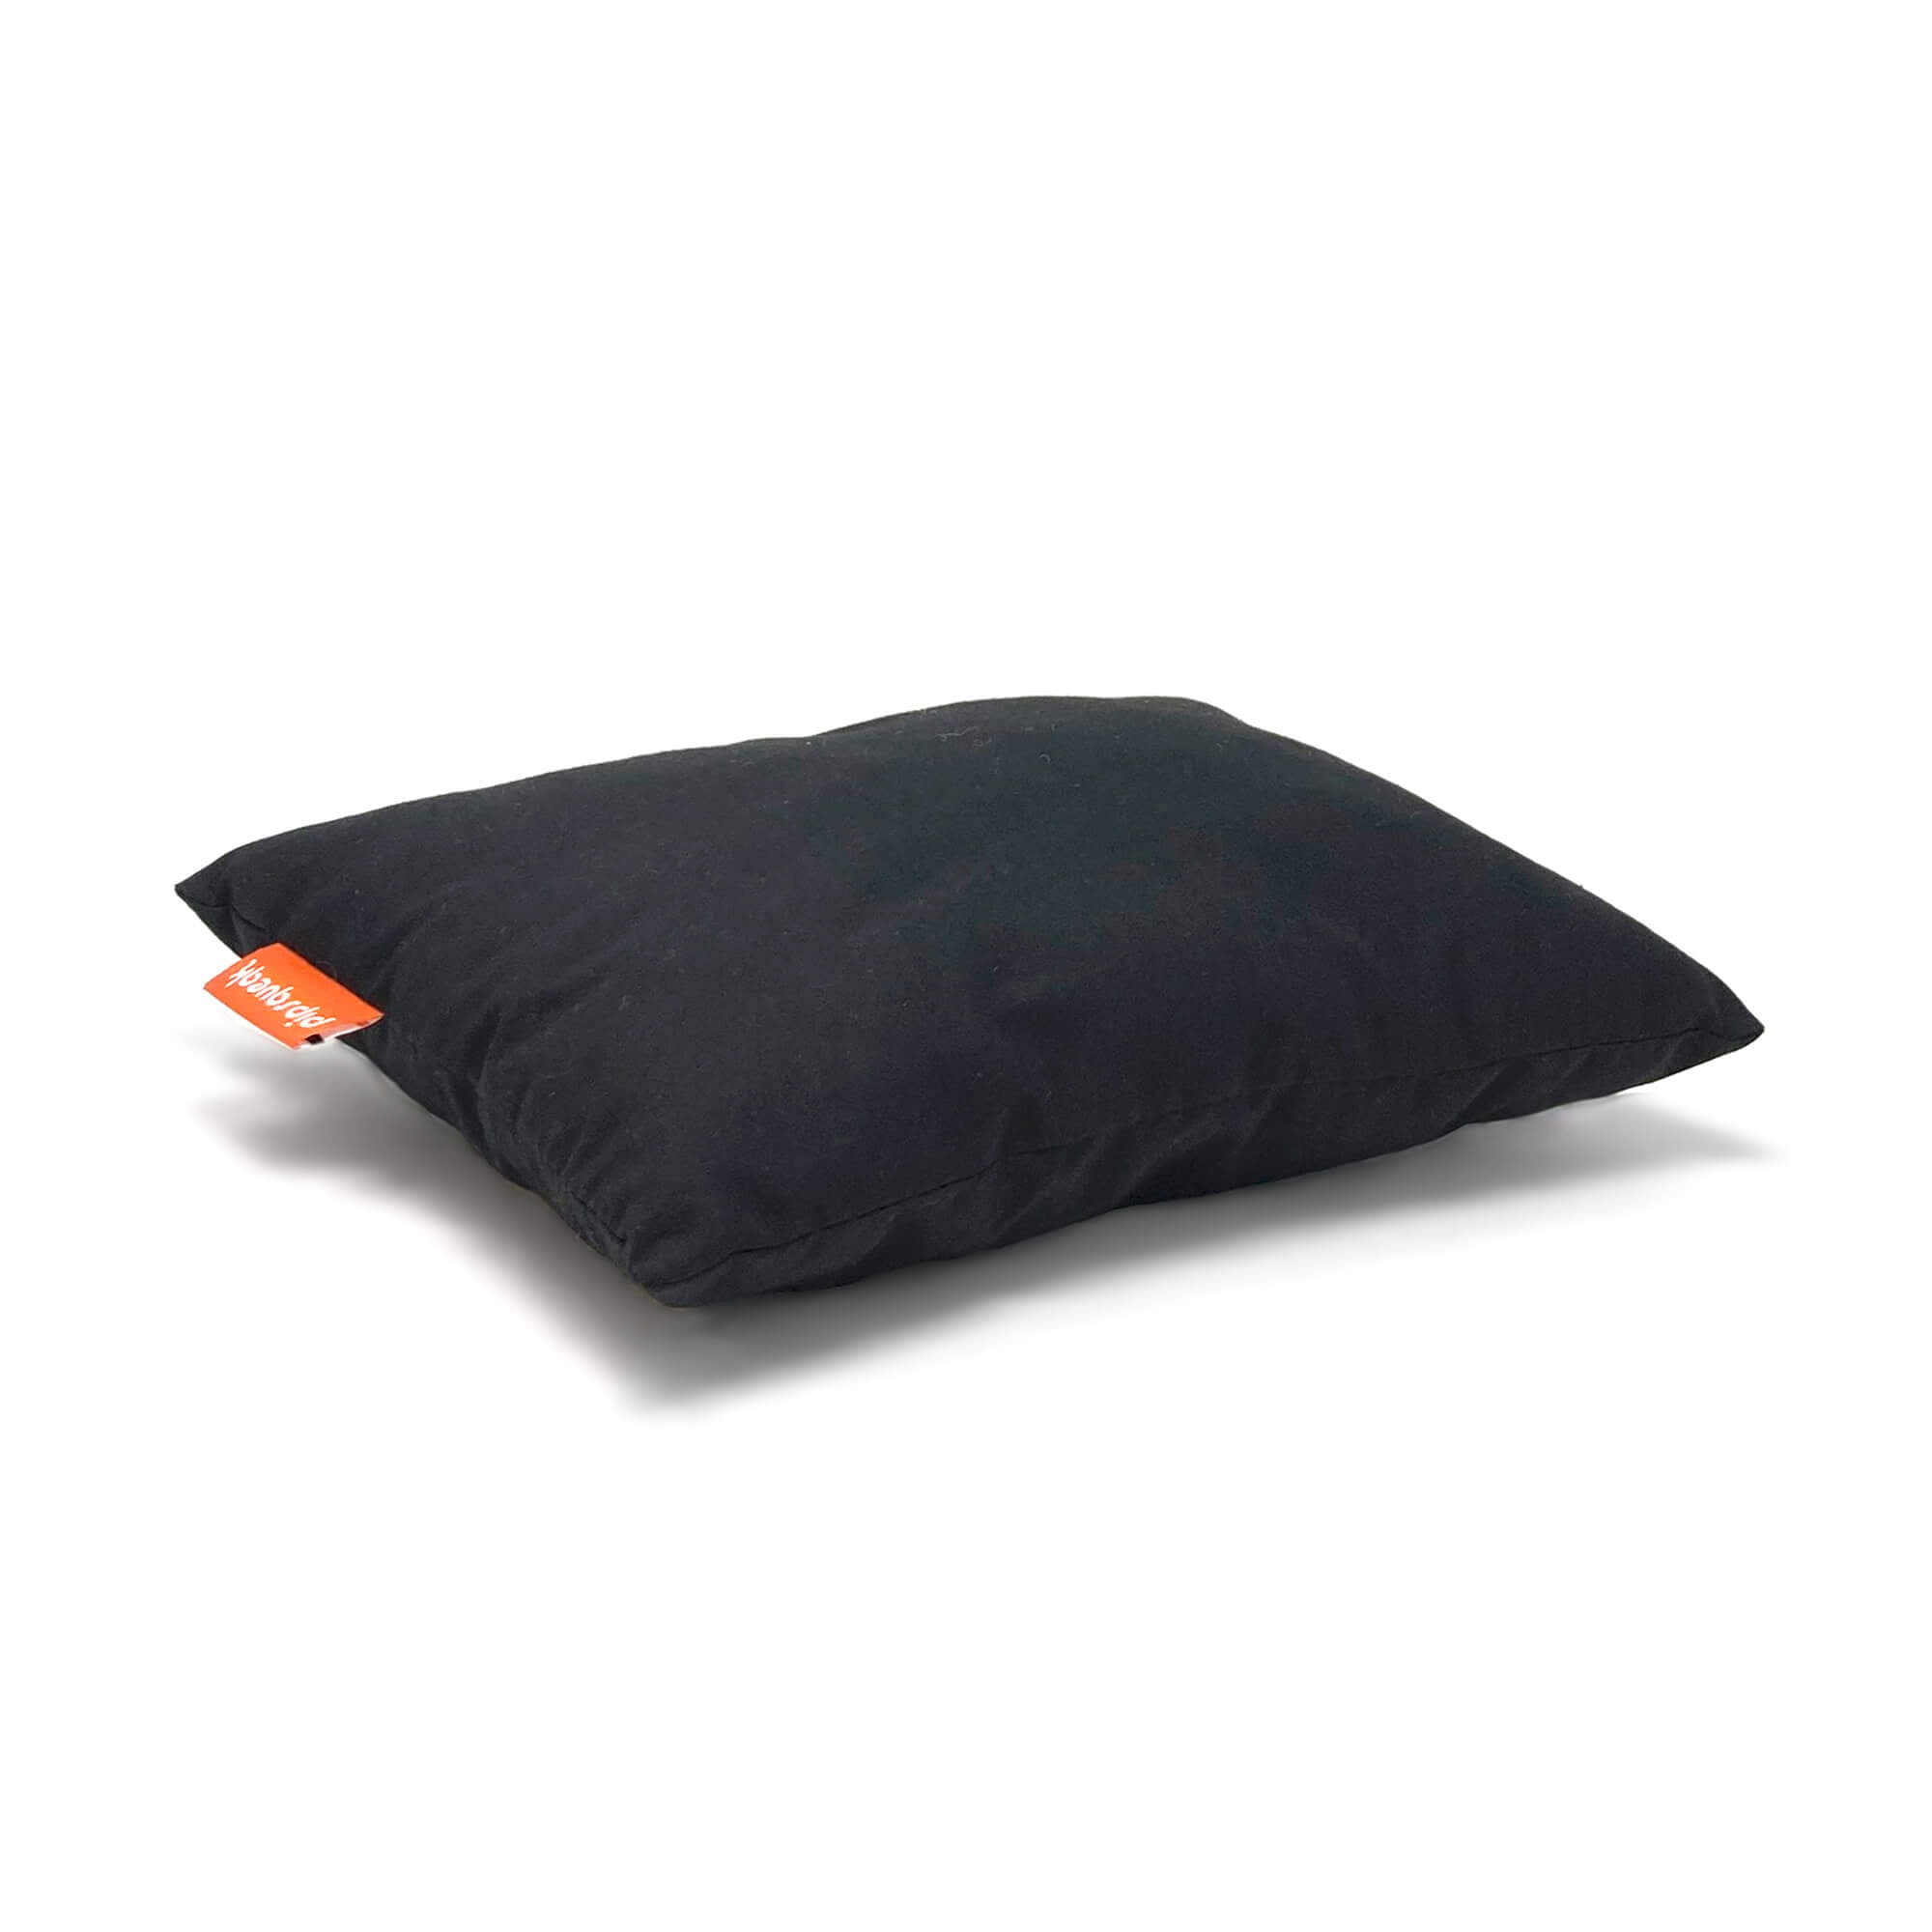 Pipsqueak Tiny Washable Pillow, Black